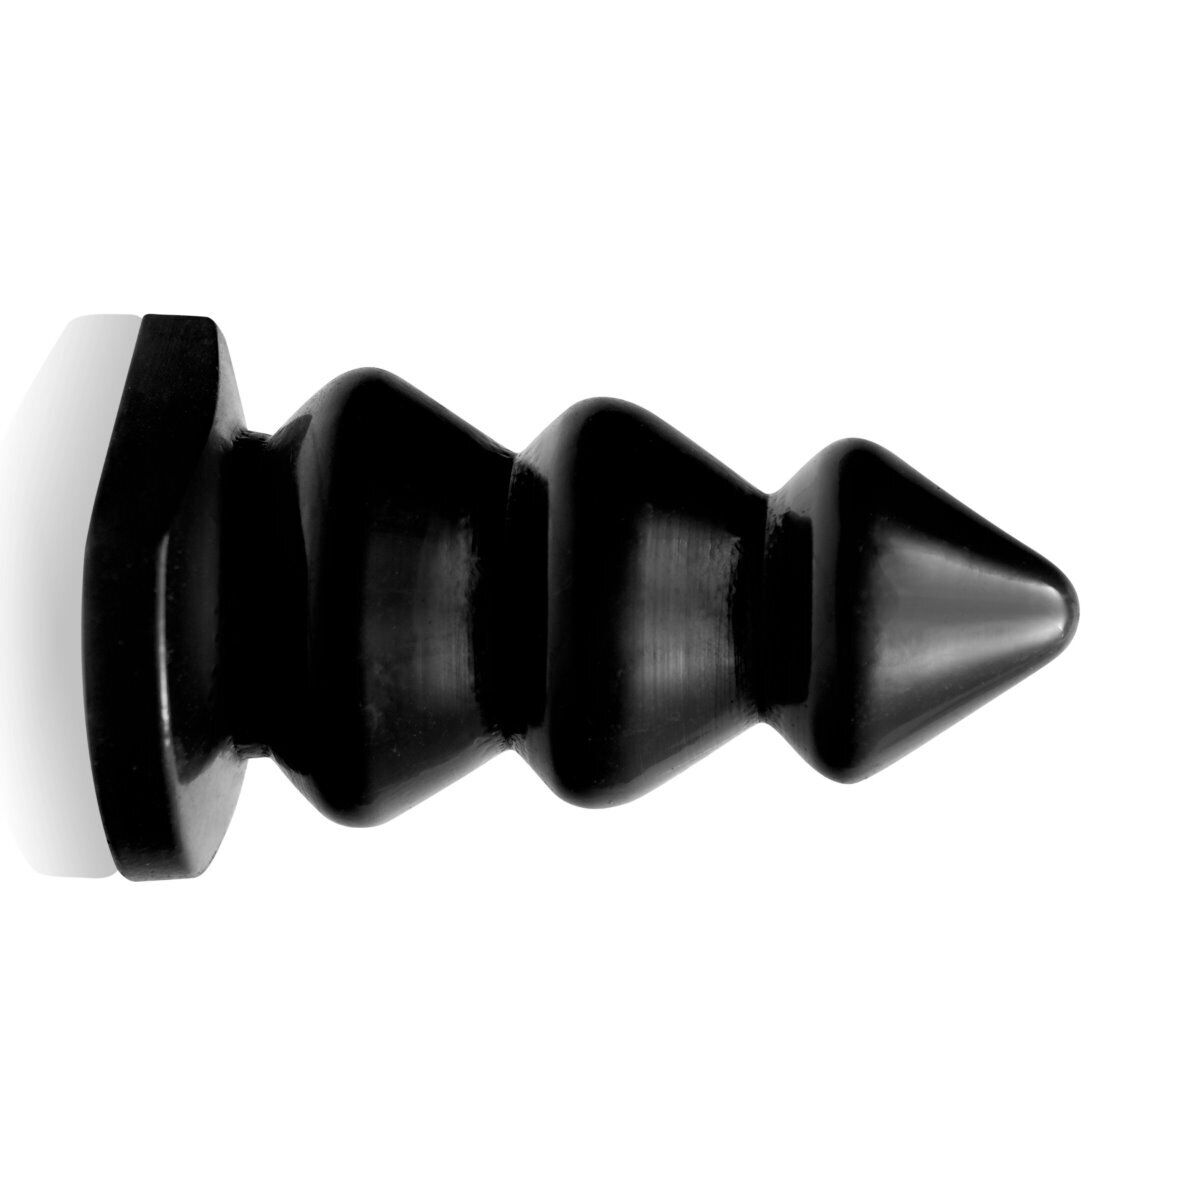 Black Ignite Ribbed Triple Bump x Large Anal Butt Plug Sex Toys for Men Women